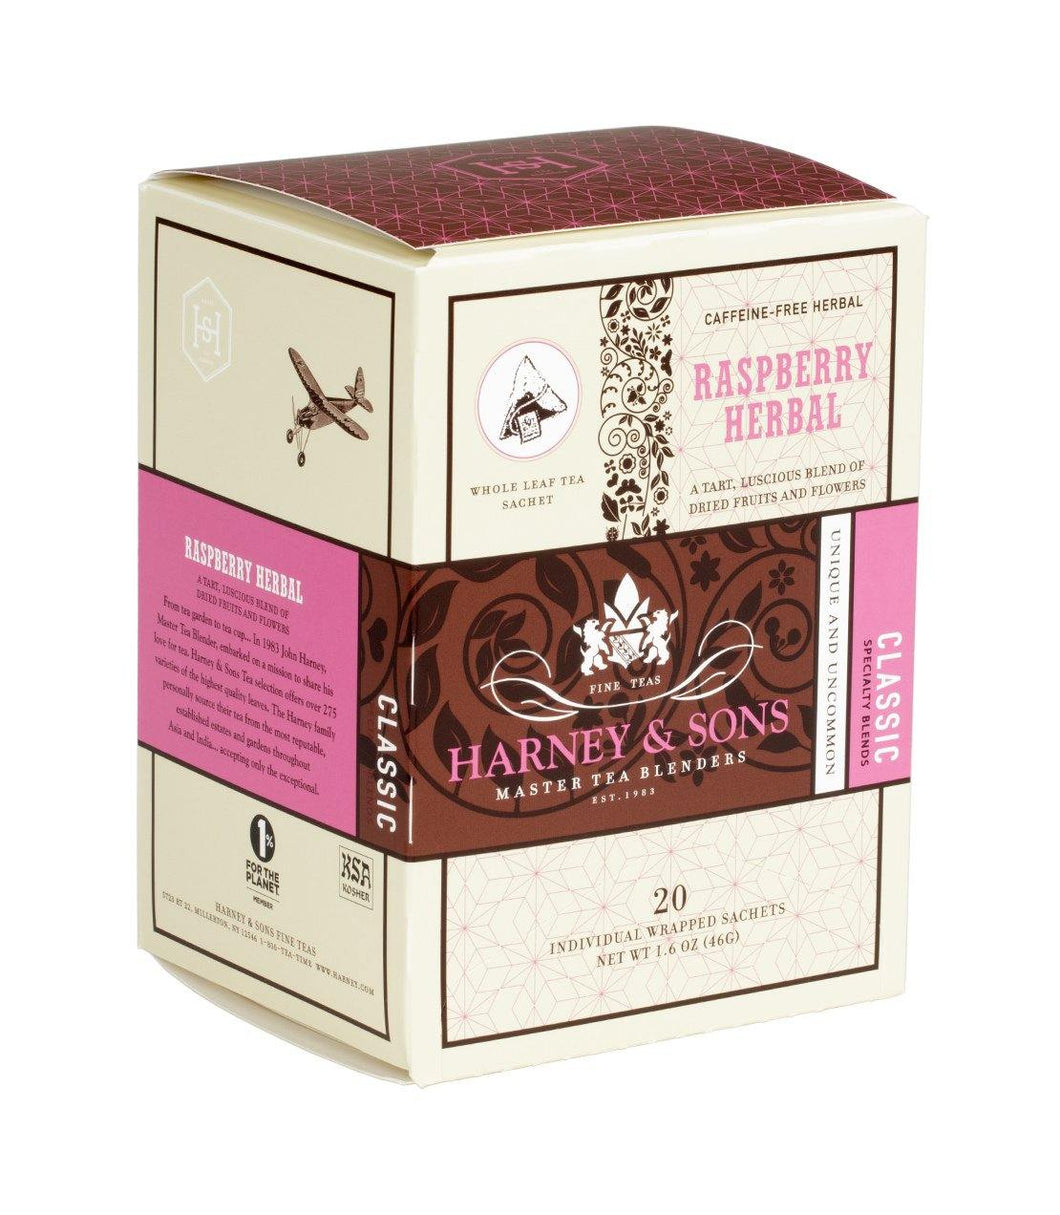 Harney & Sons Raspberry Herbal 20 Wrapped Sachets - Premium Teas Canada